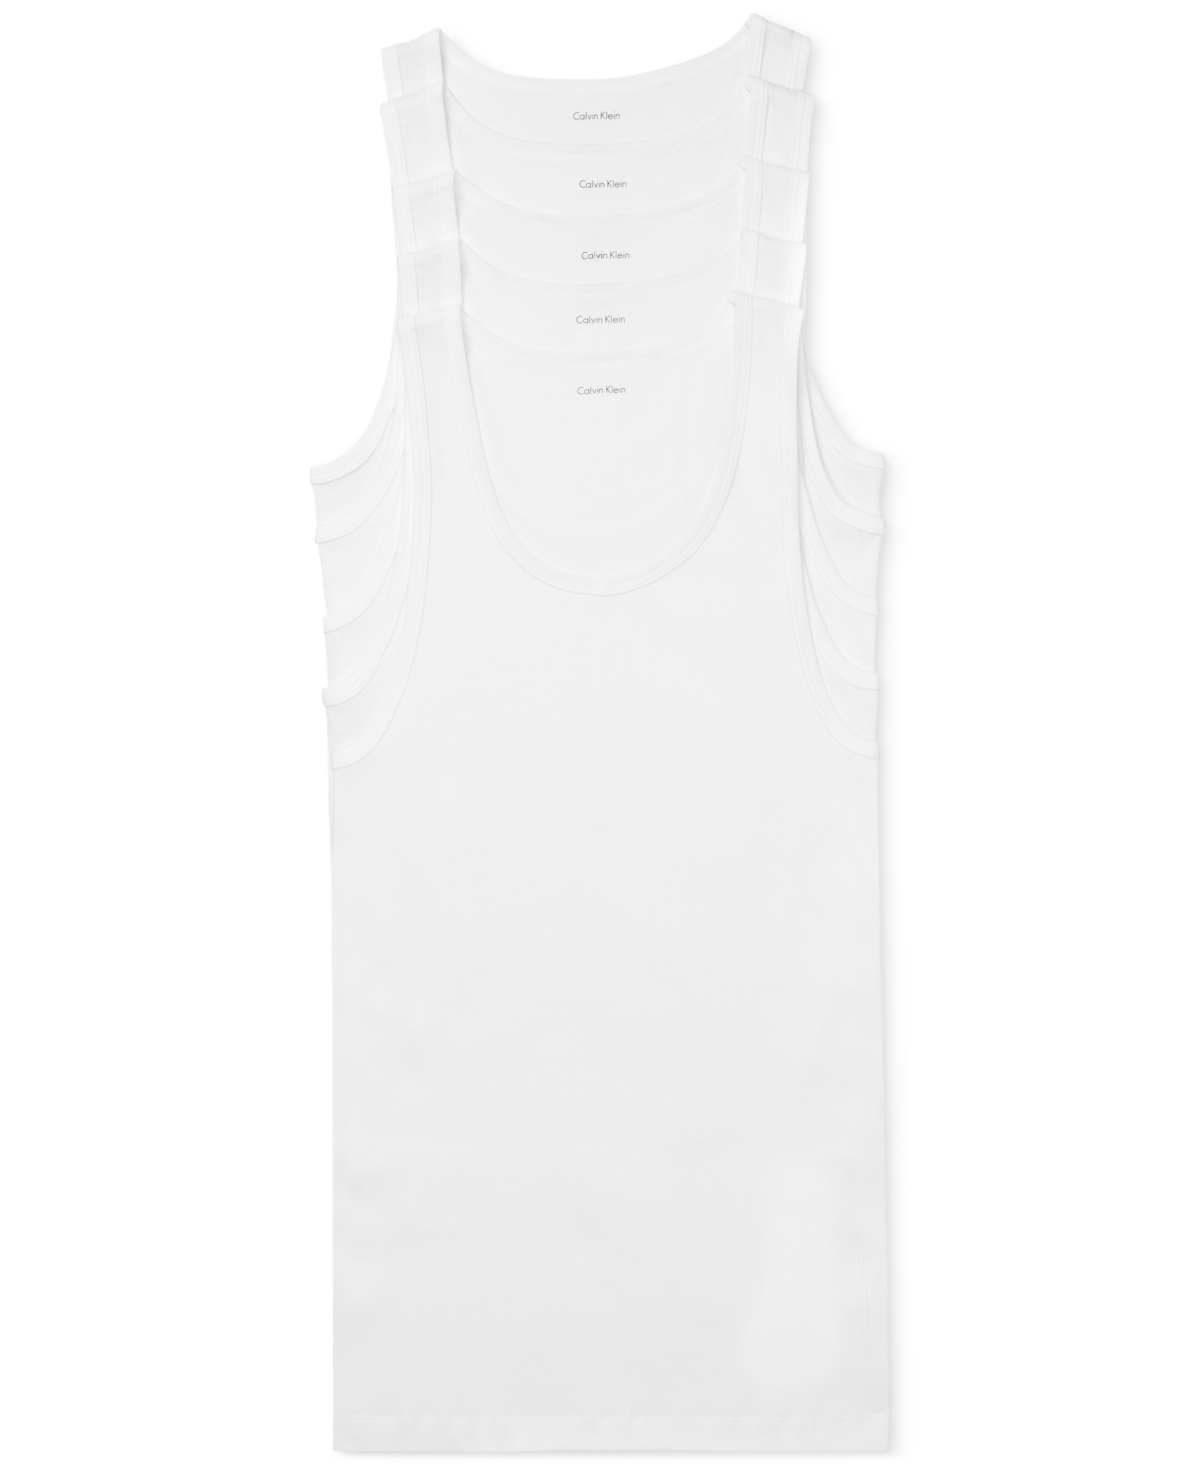 Men's 5-Pk. Cotton Classics Tank Top Undershirts - White